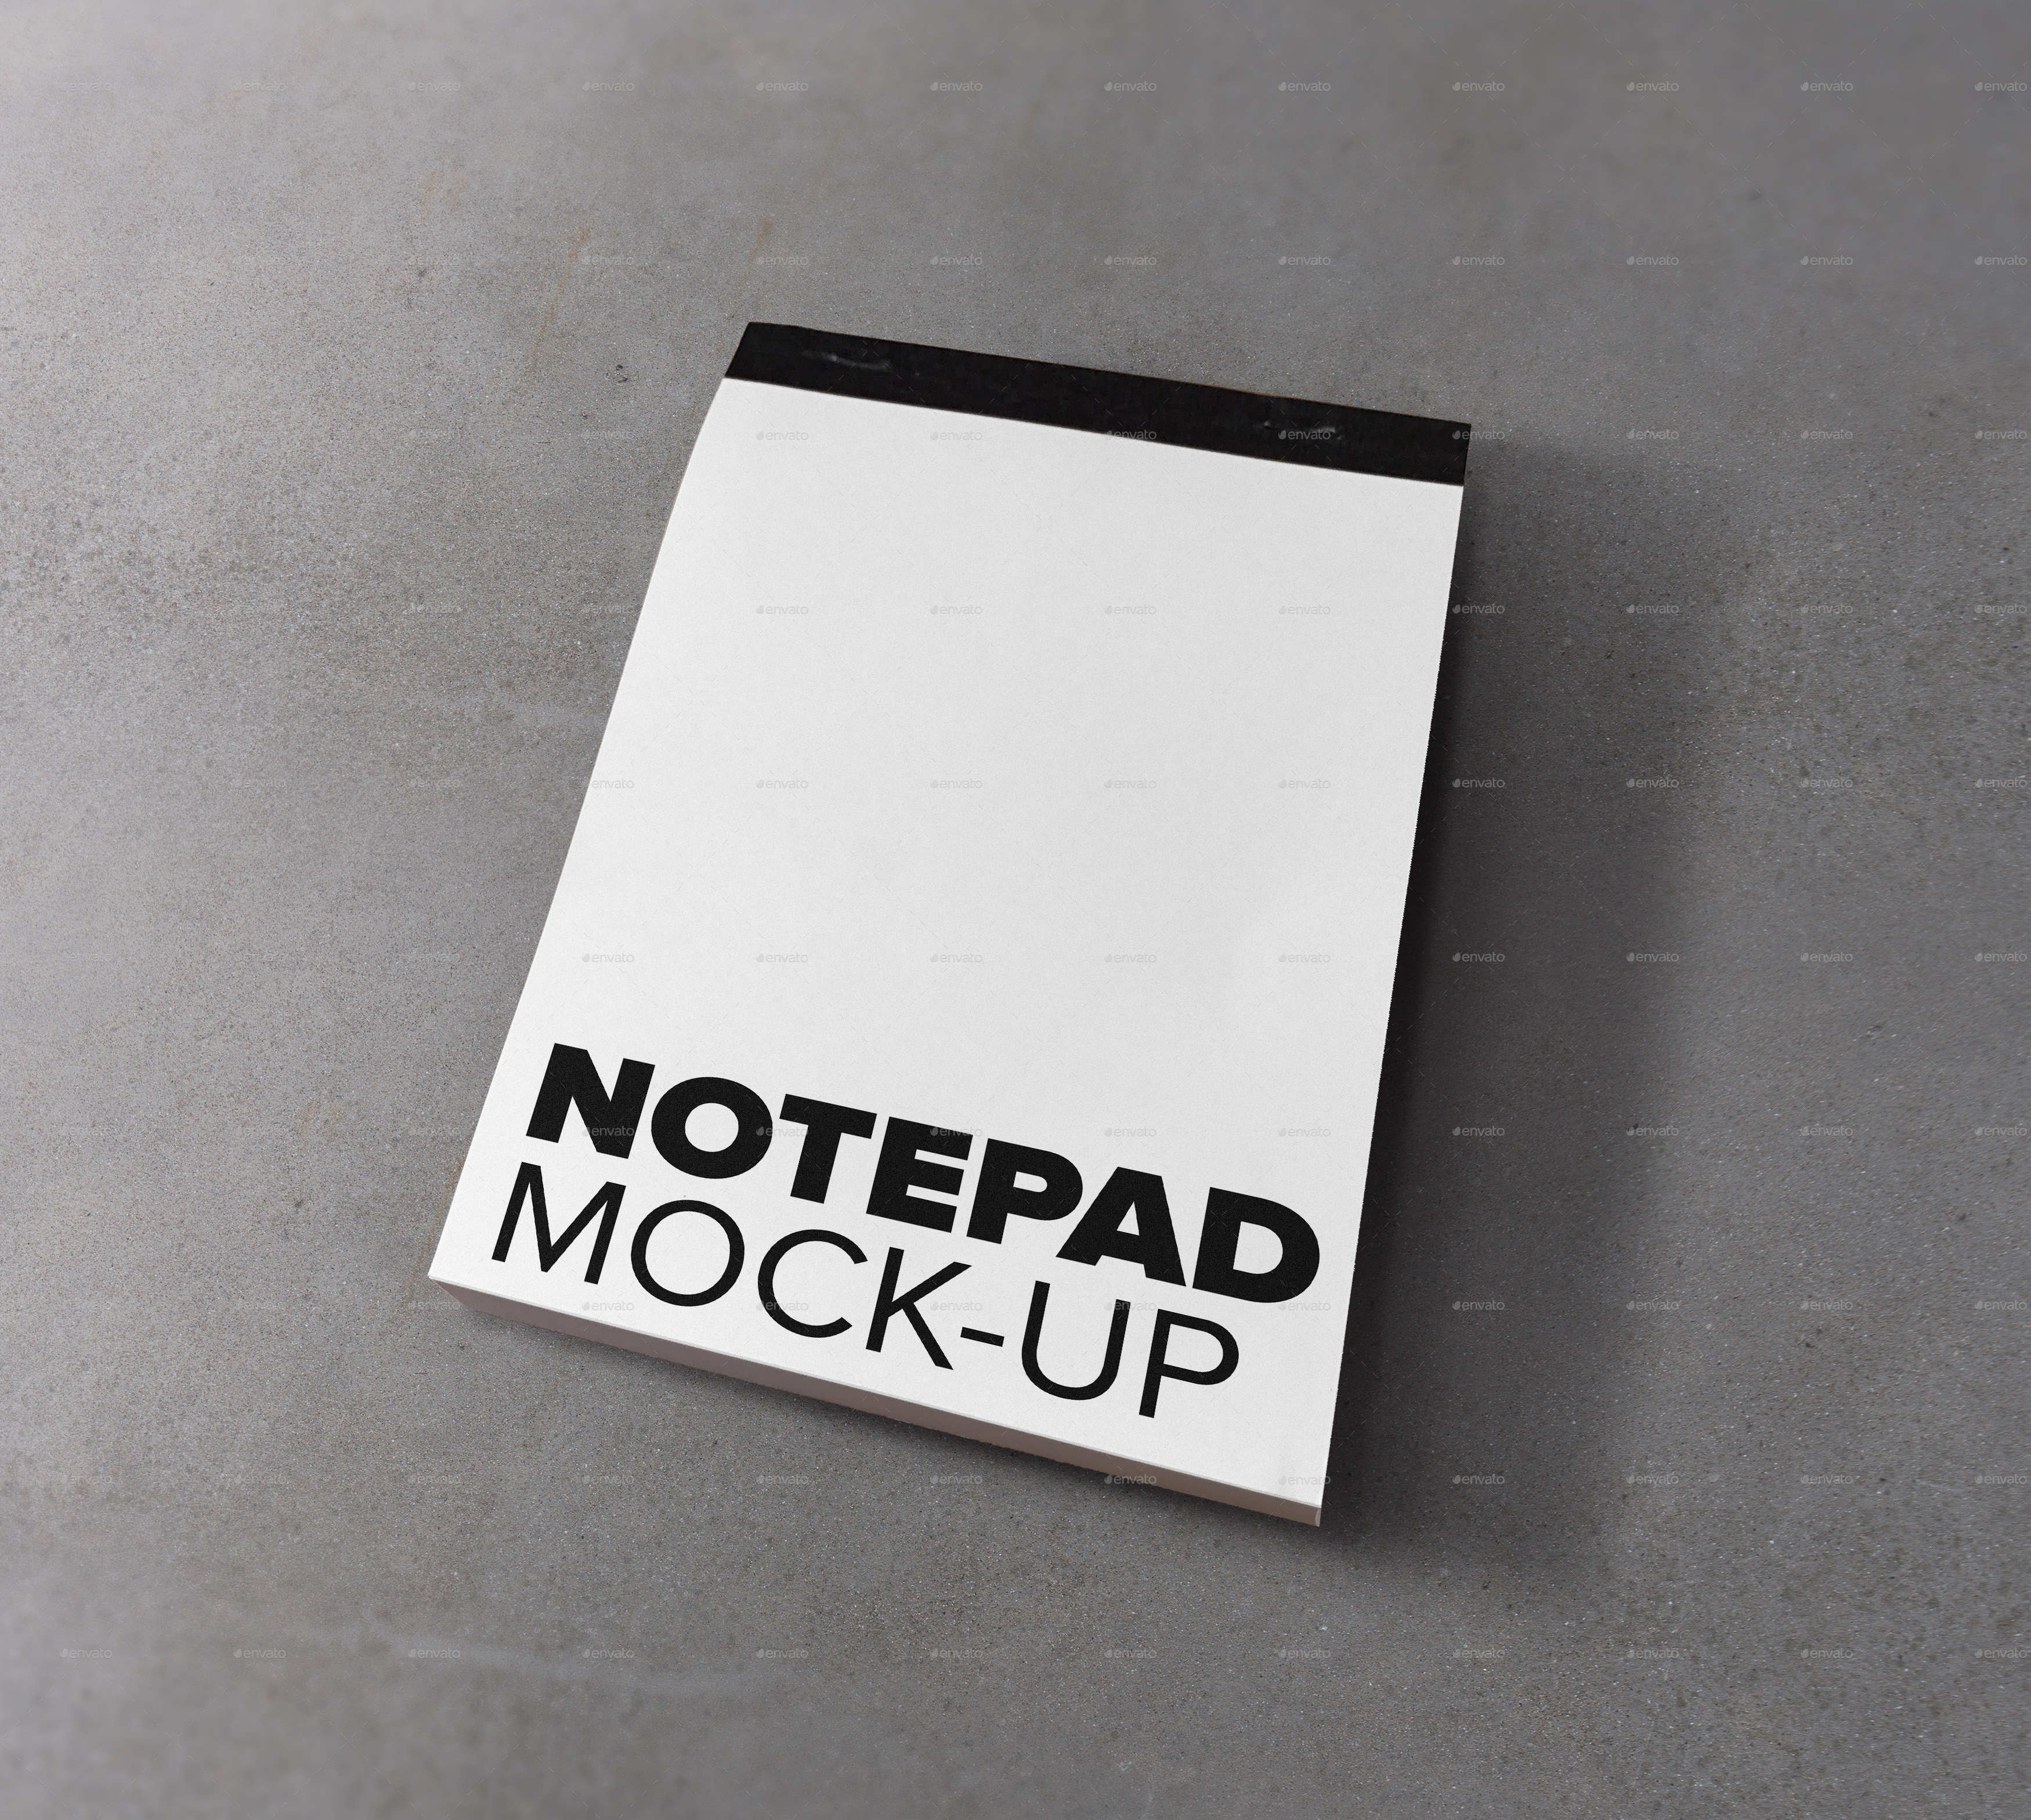 Download Mockup Free Notepad - Notepad PSD Mockup Download for Free ...